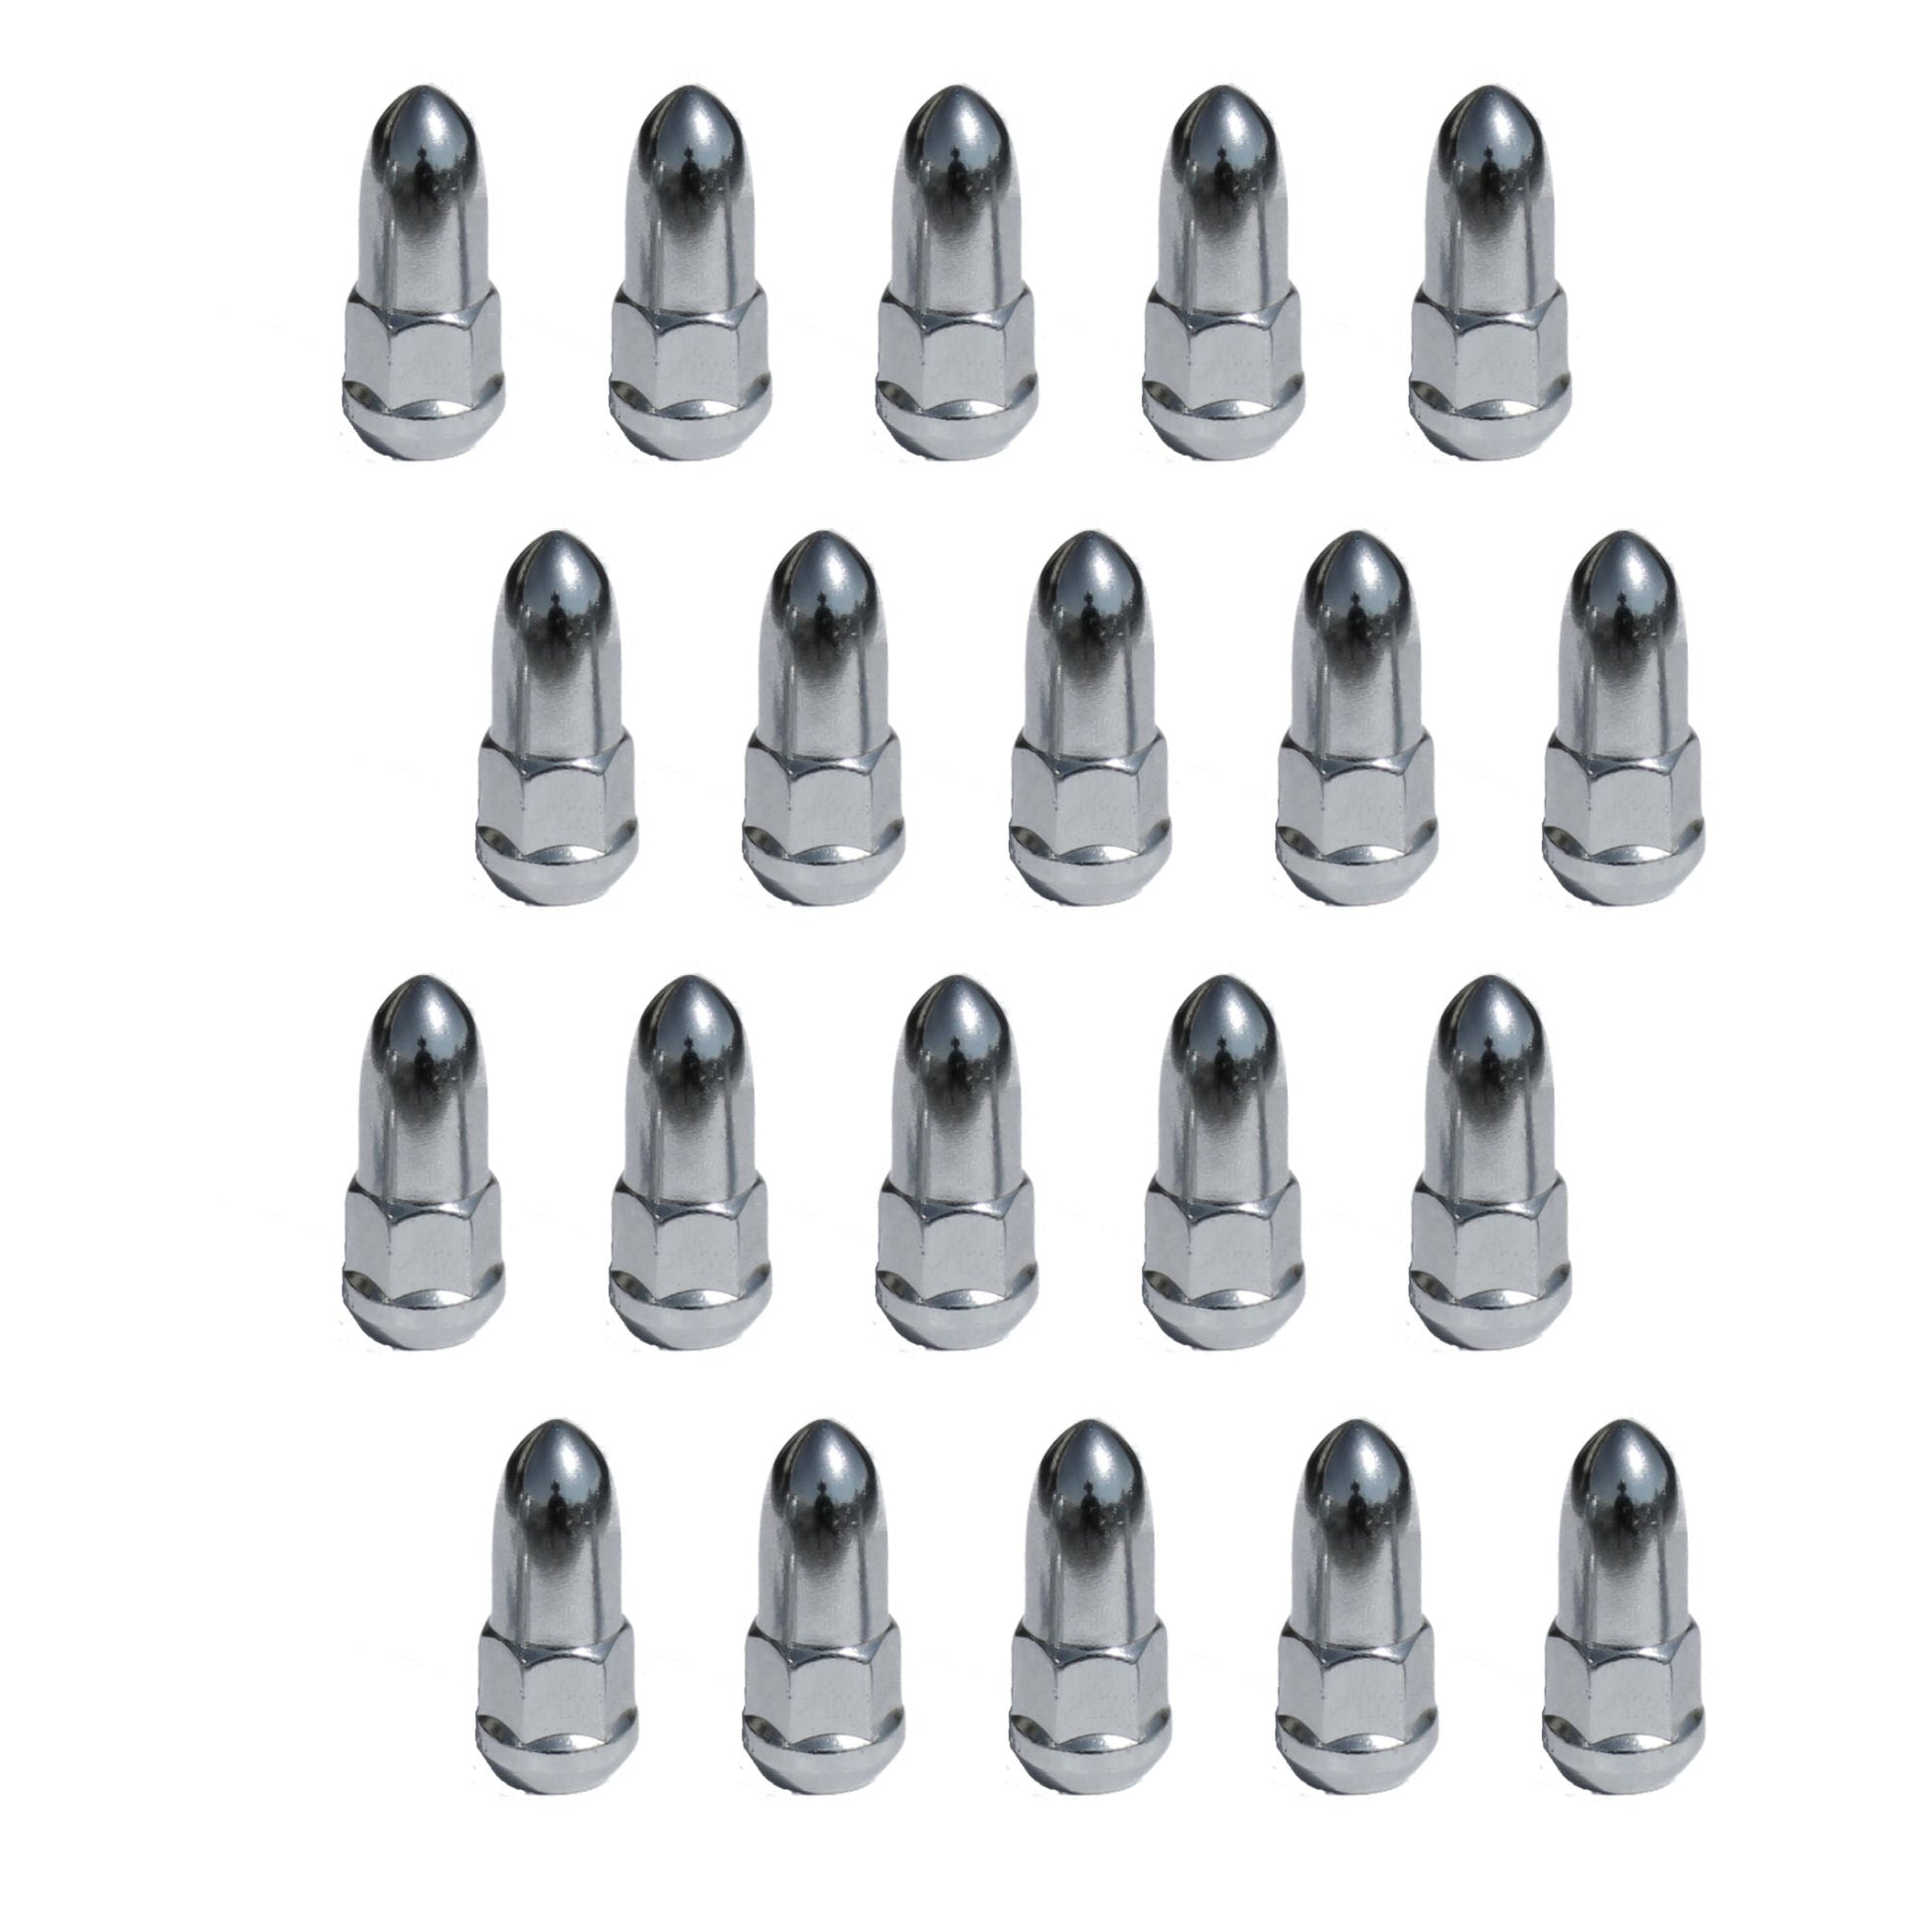 12 x 1.5" Passenger Bullet | 17mm Head |Chrome Lug Nuts | Lug Nuts